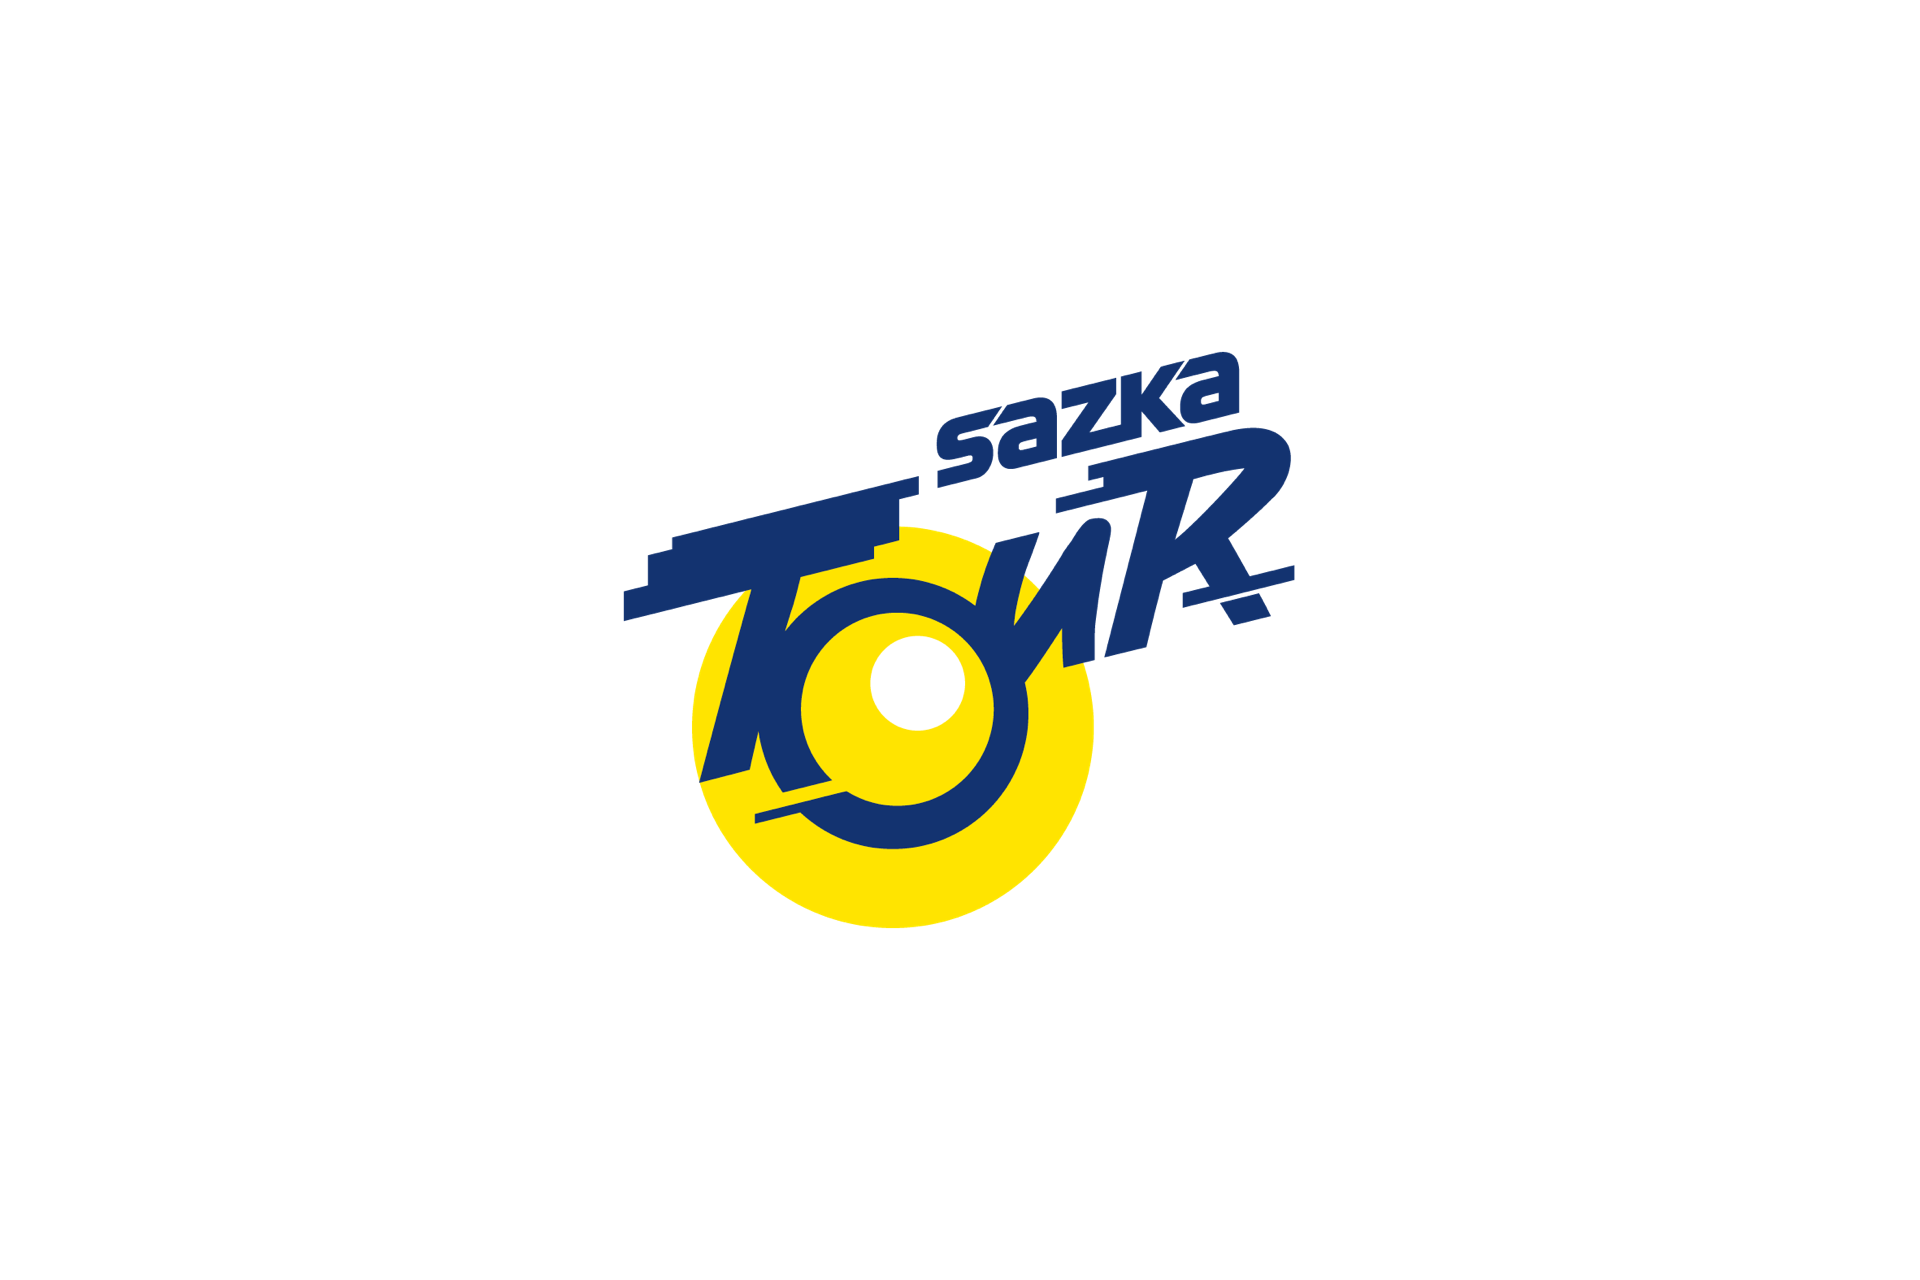 Sazka Tour 2021: etap 3. Królewski dla Tobiasa Hallanda Johannessena